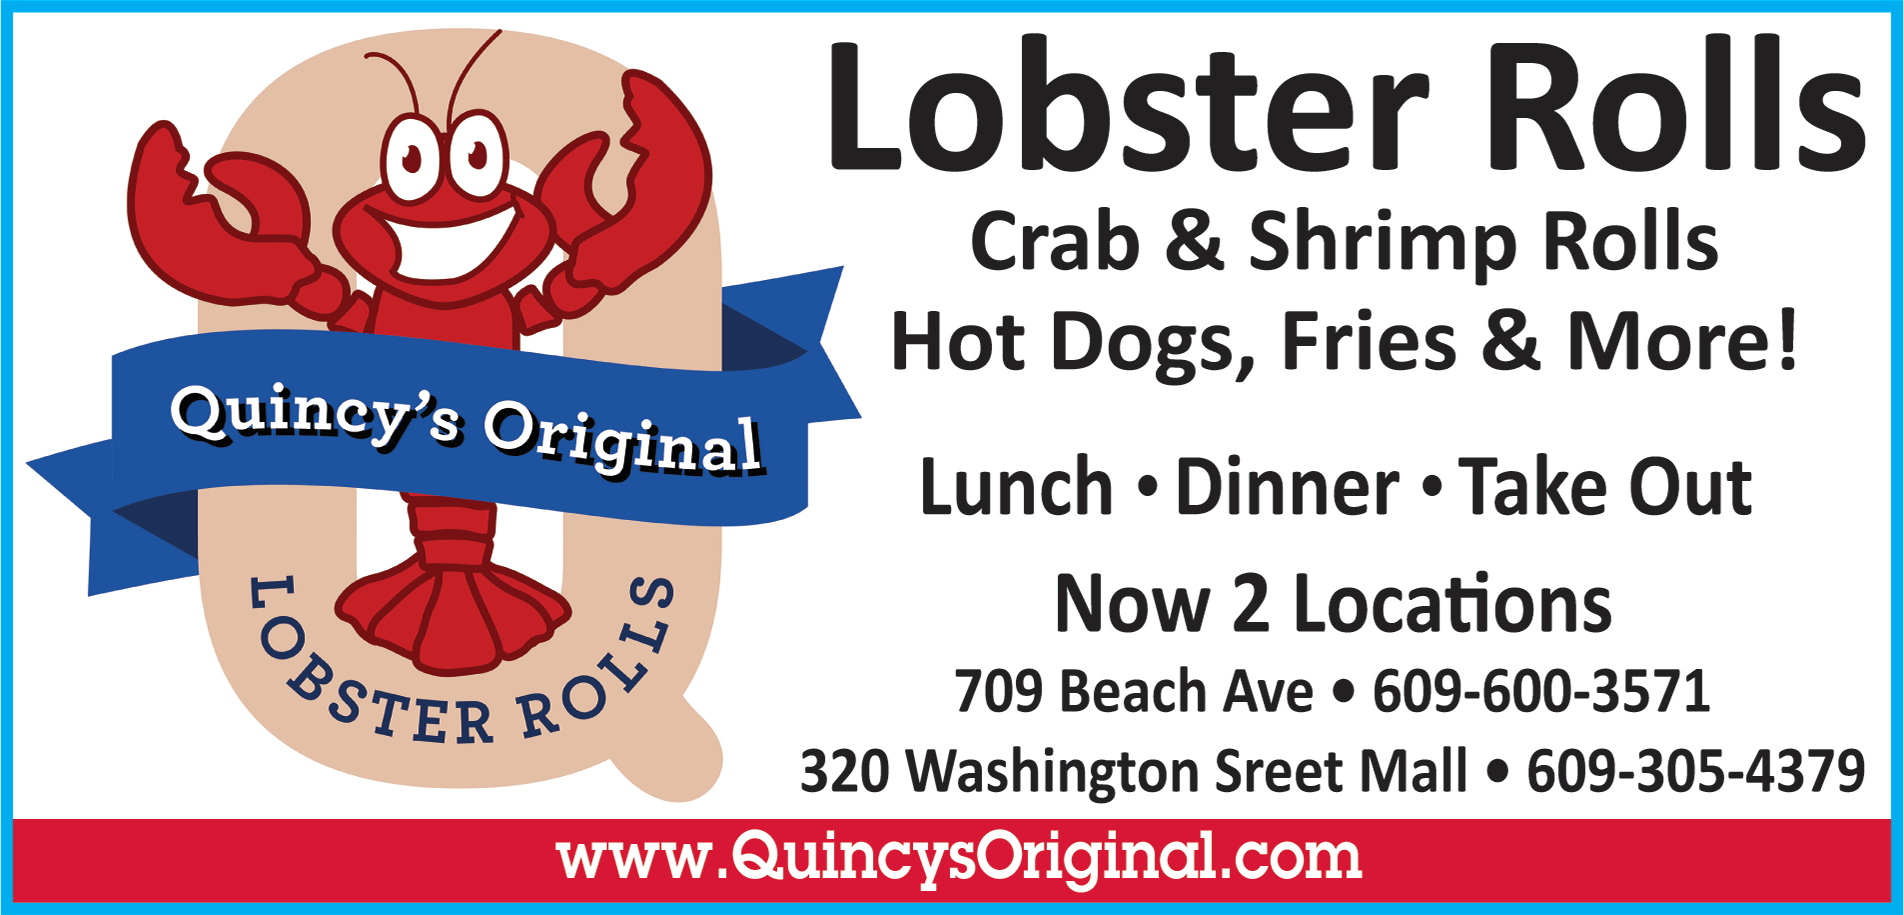 Quincy's Original Lobster Roll Print Ad